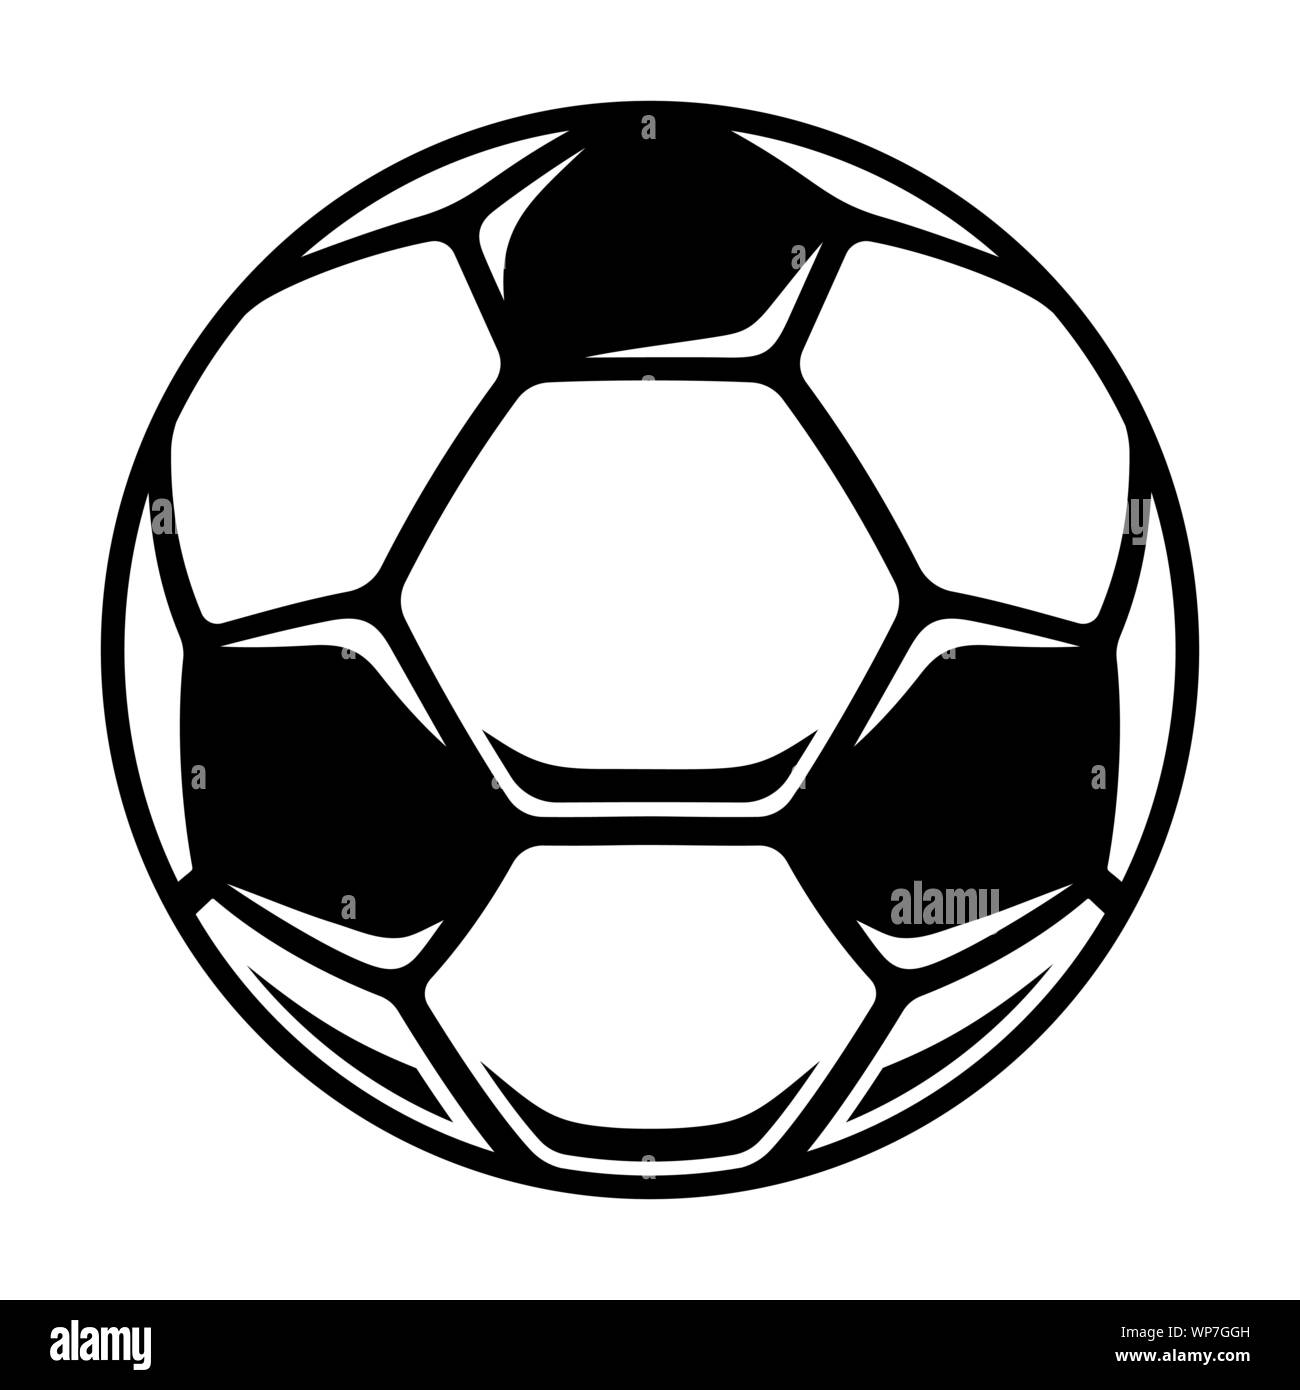 L'icône d'un ballon de football. Ballon de football européen. Vector illustration noir et blanc Illustration de Vecteur